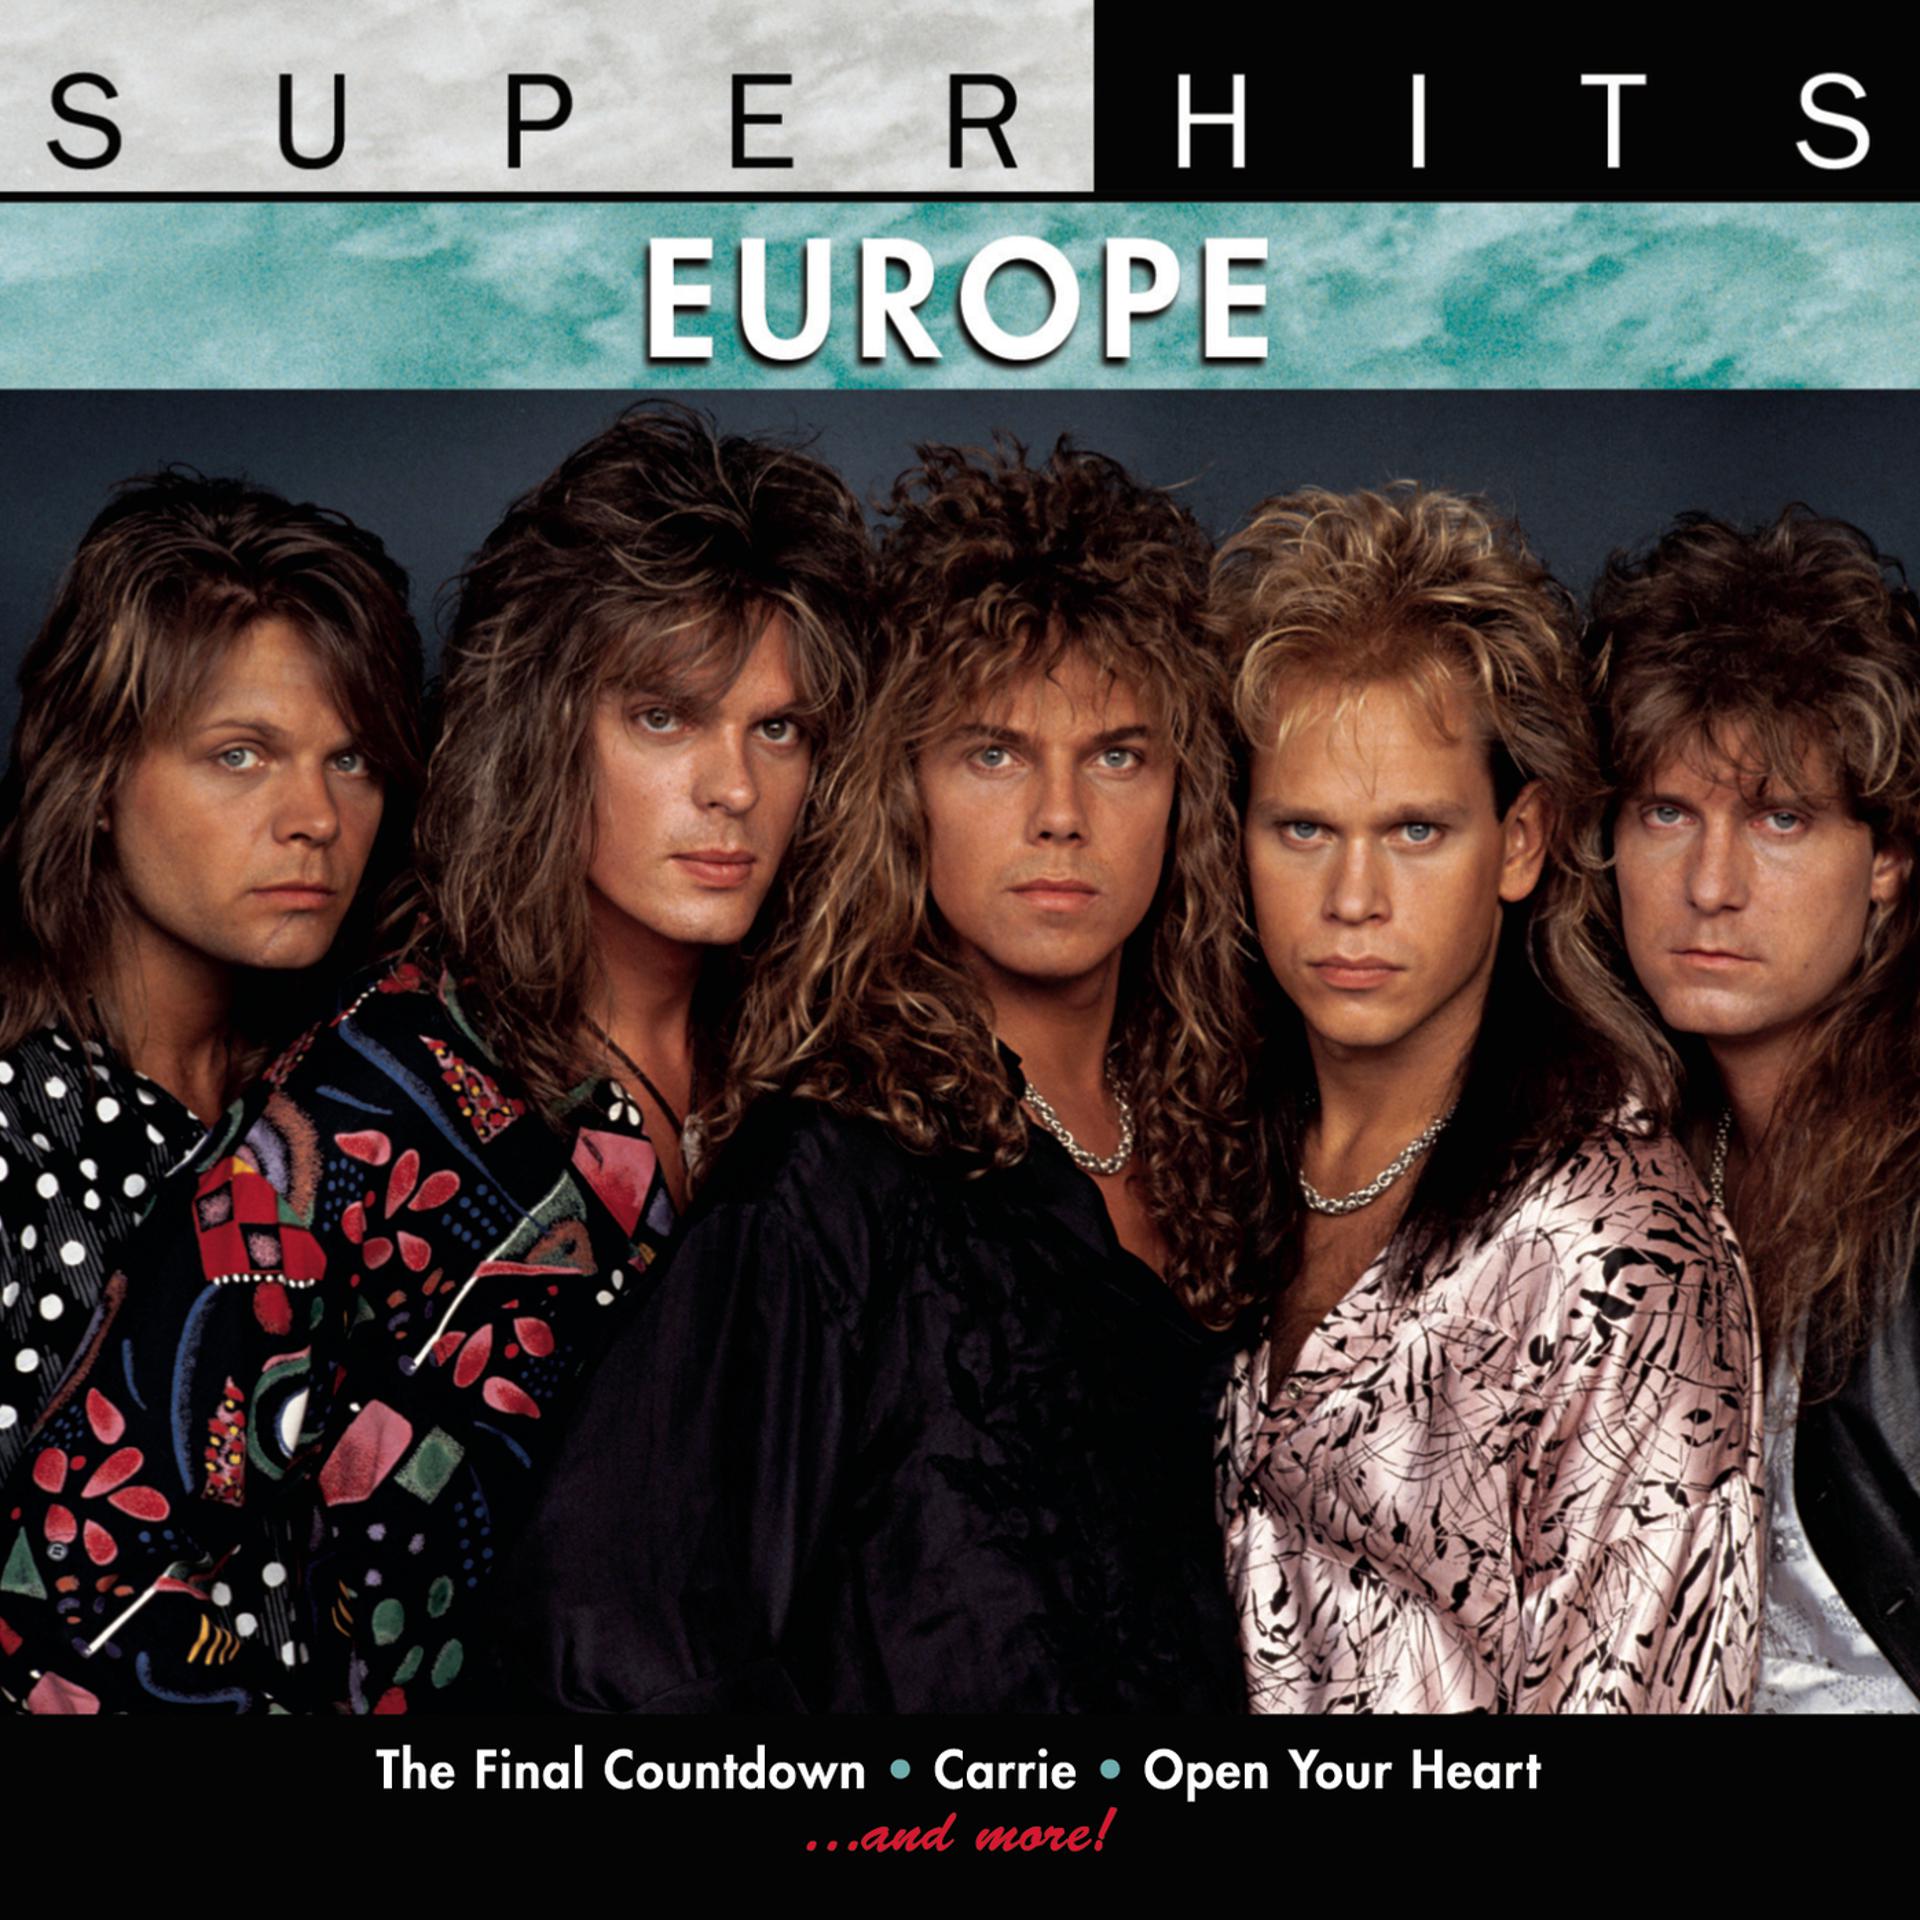 Mp3 слушать зарубежные. Europe группа 1986. Europa группа the Final Countdown. Europe Band обложки. Europe the Final Countdown обложка.